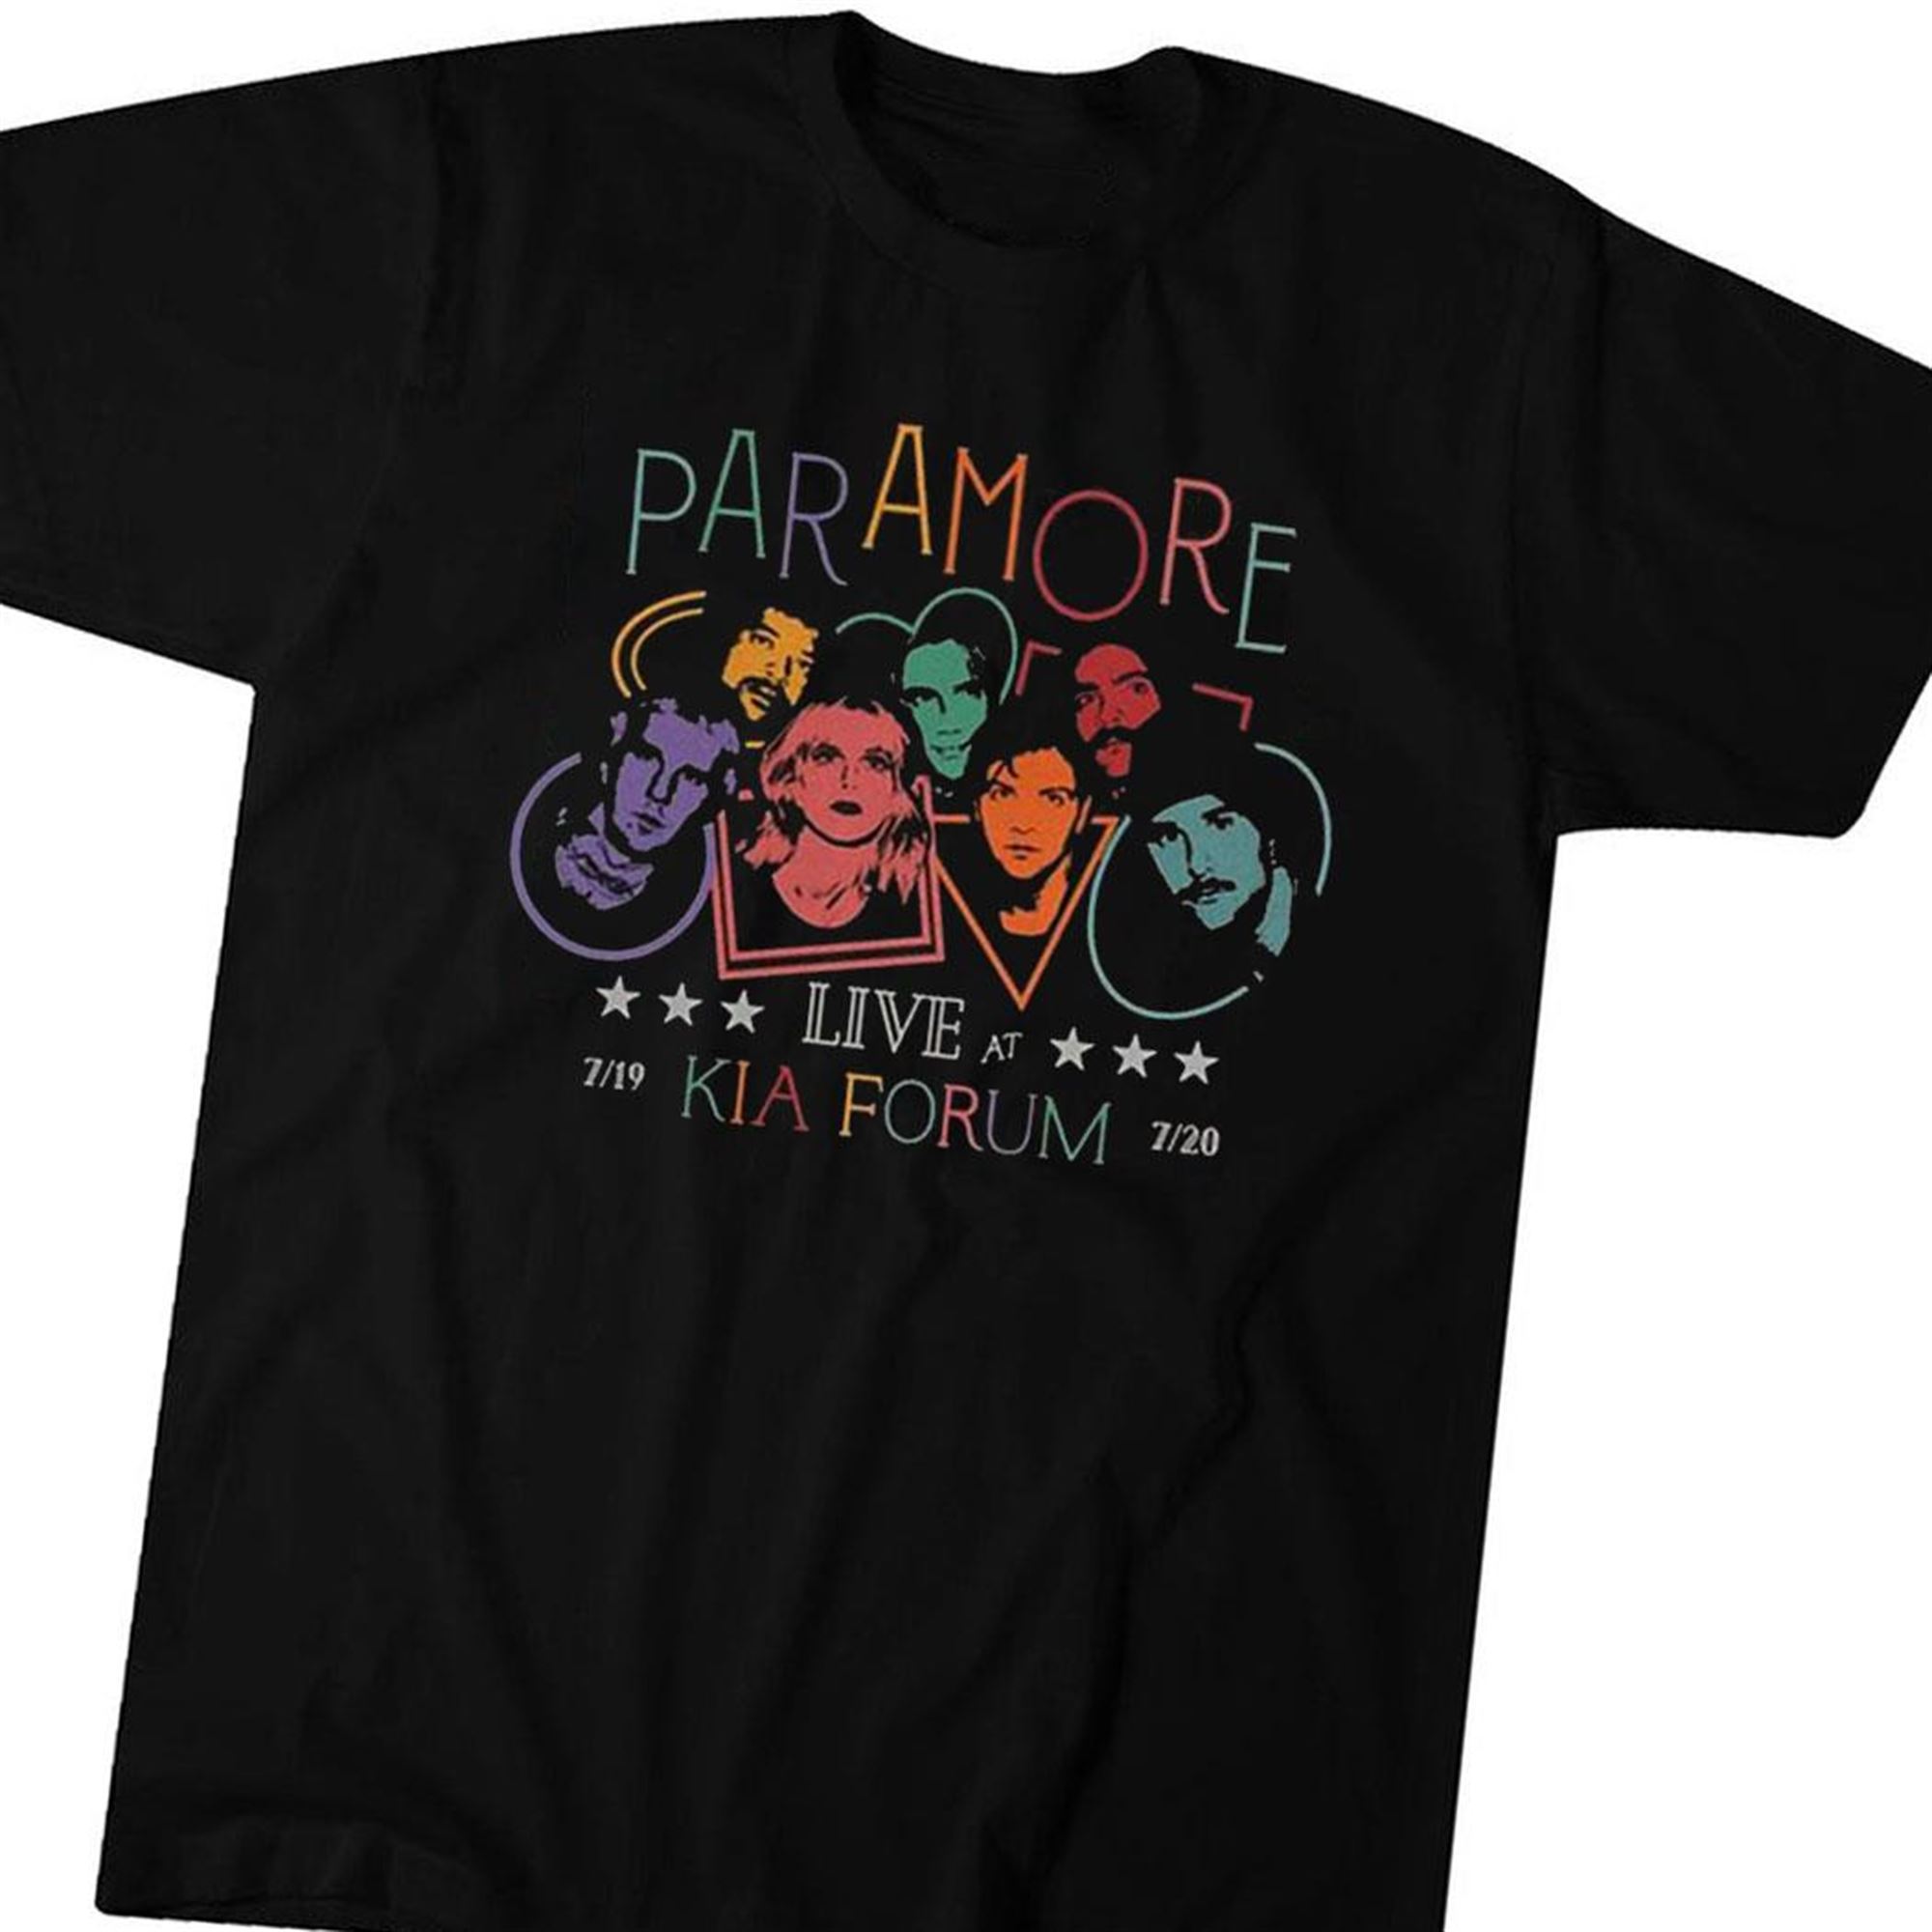 Paramore Live Jul 19 Kia Forum Jul 20 T-shirt Hoodie